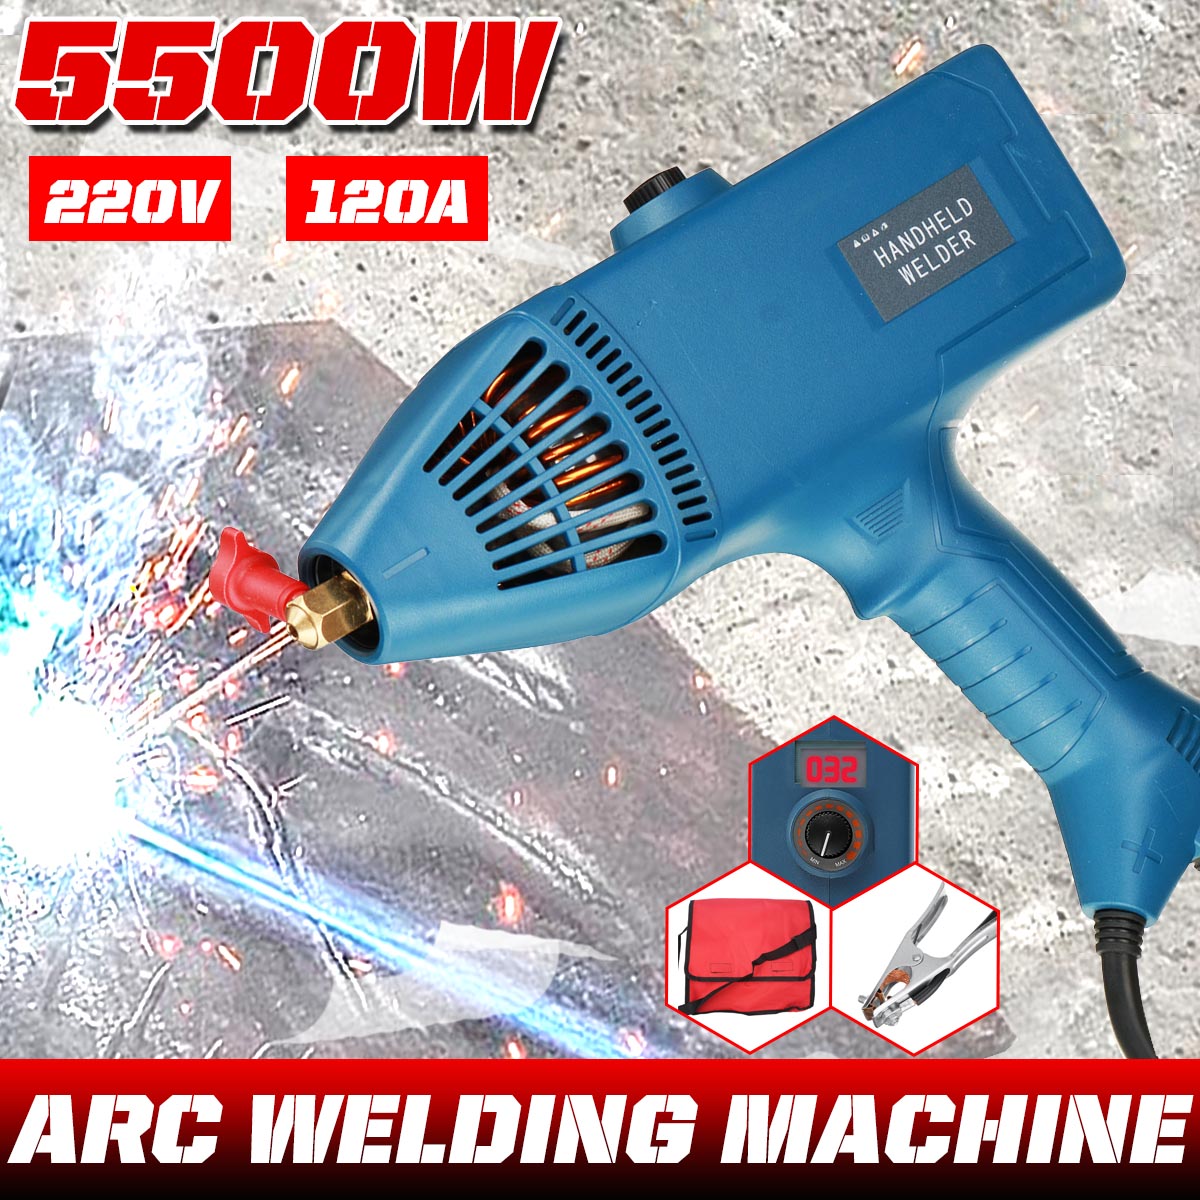 5500W-ARC-Welding-Machine-Handheld-Electric-Welding-Tools-with-Ground-Wire-Metal-Clip-220V-EU-Plug-1901484-2